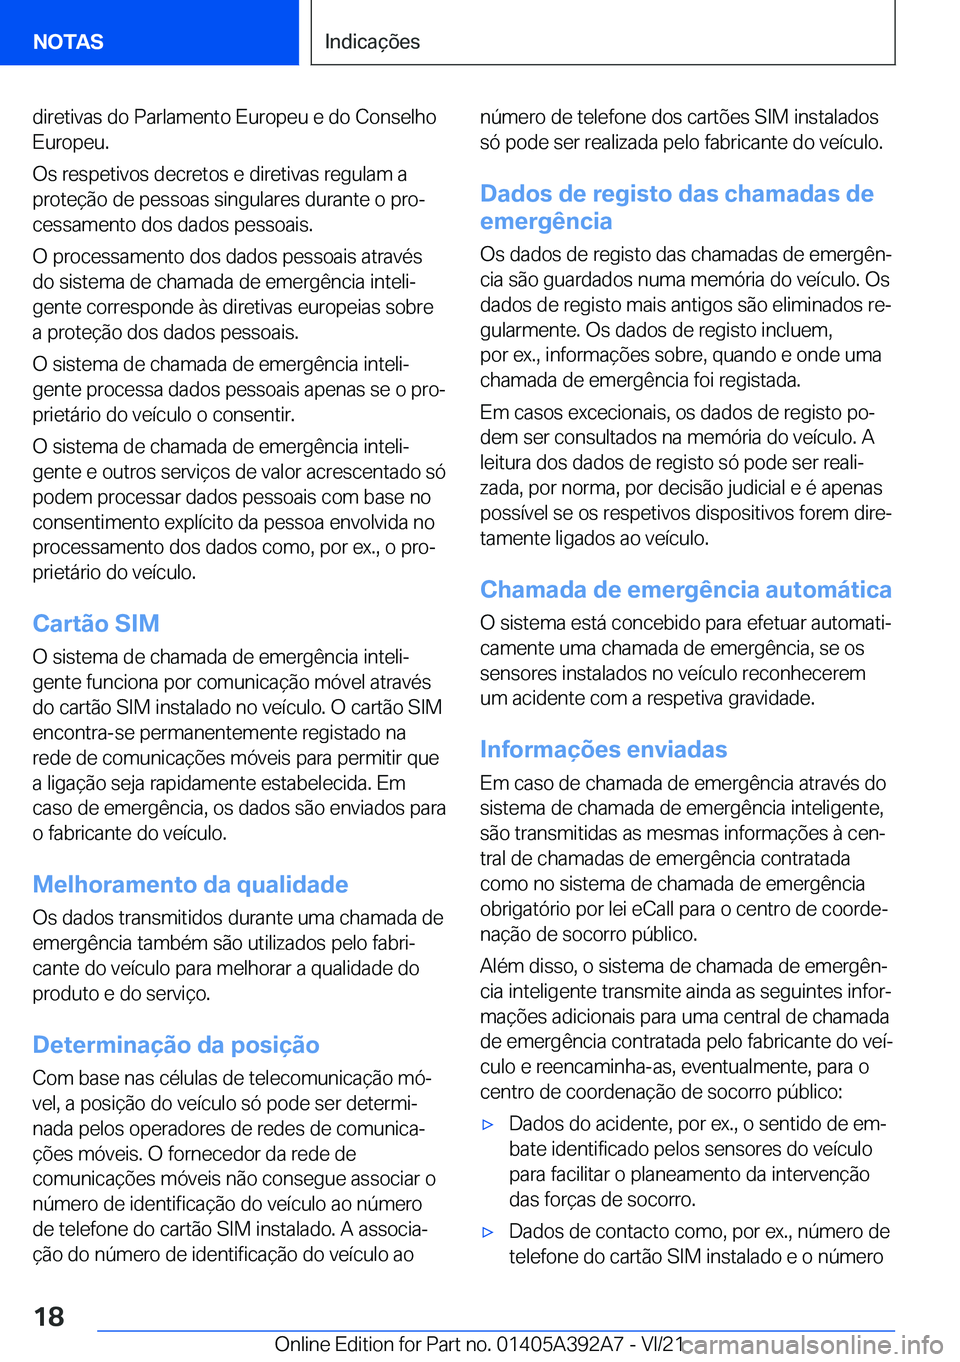 BMW 4 SERIES 2022  Manual do condutor (in Portuguese) �d�i�r�e�t�i�v�a�s��d�o��P�a�r�l�a�m�e�n�t�o��E�u�r�o�p�e�u��e��d�o��C�o�n�s�e�l�h�o�E�u�r�o�p�e�u�.
�O�s��r�e�s�p�e�t�i�v�o�s��d�e�c�r�e�t�o�s��e��d�i�r�e�t�i�v�a�s��r�e�g�u�l�a�m��a �p�r